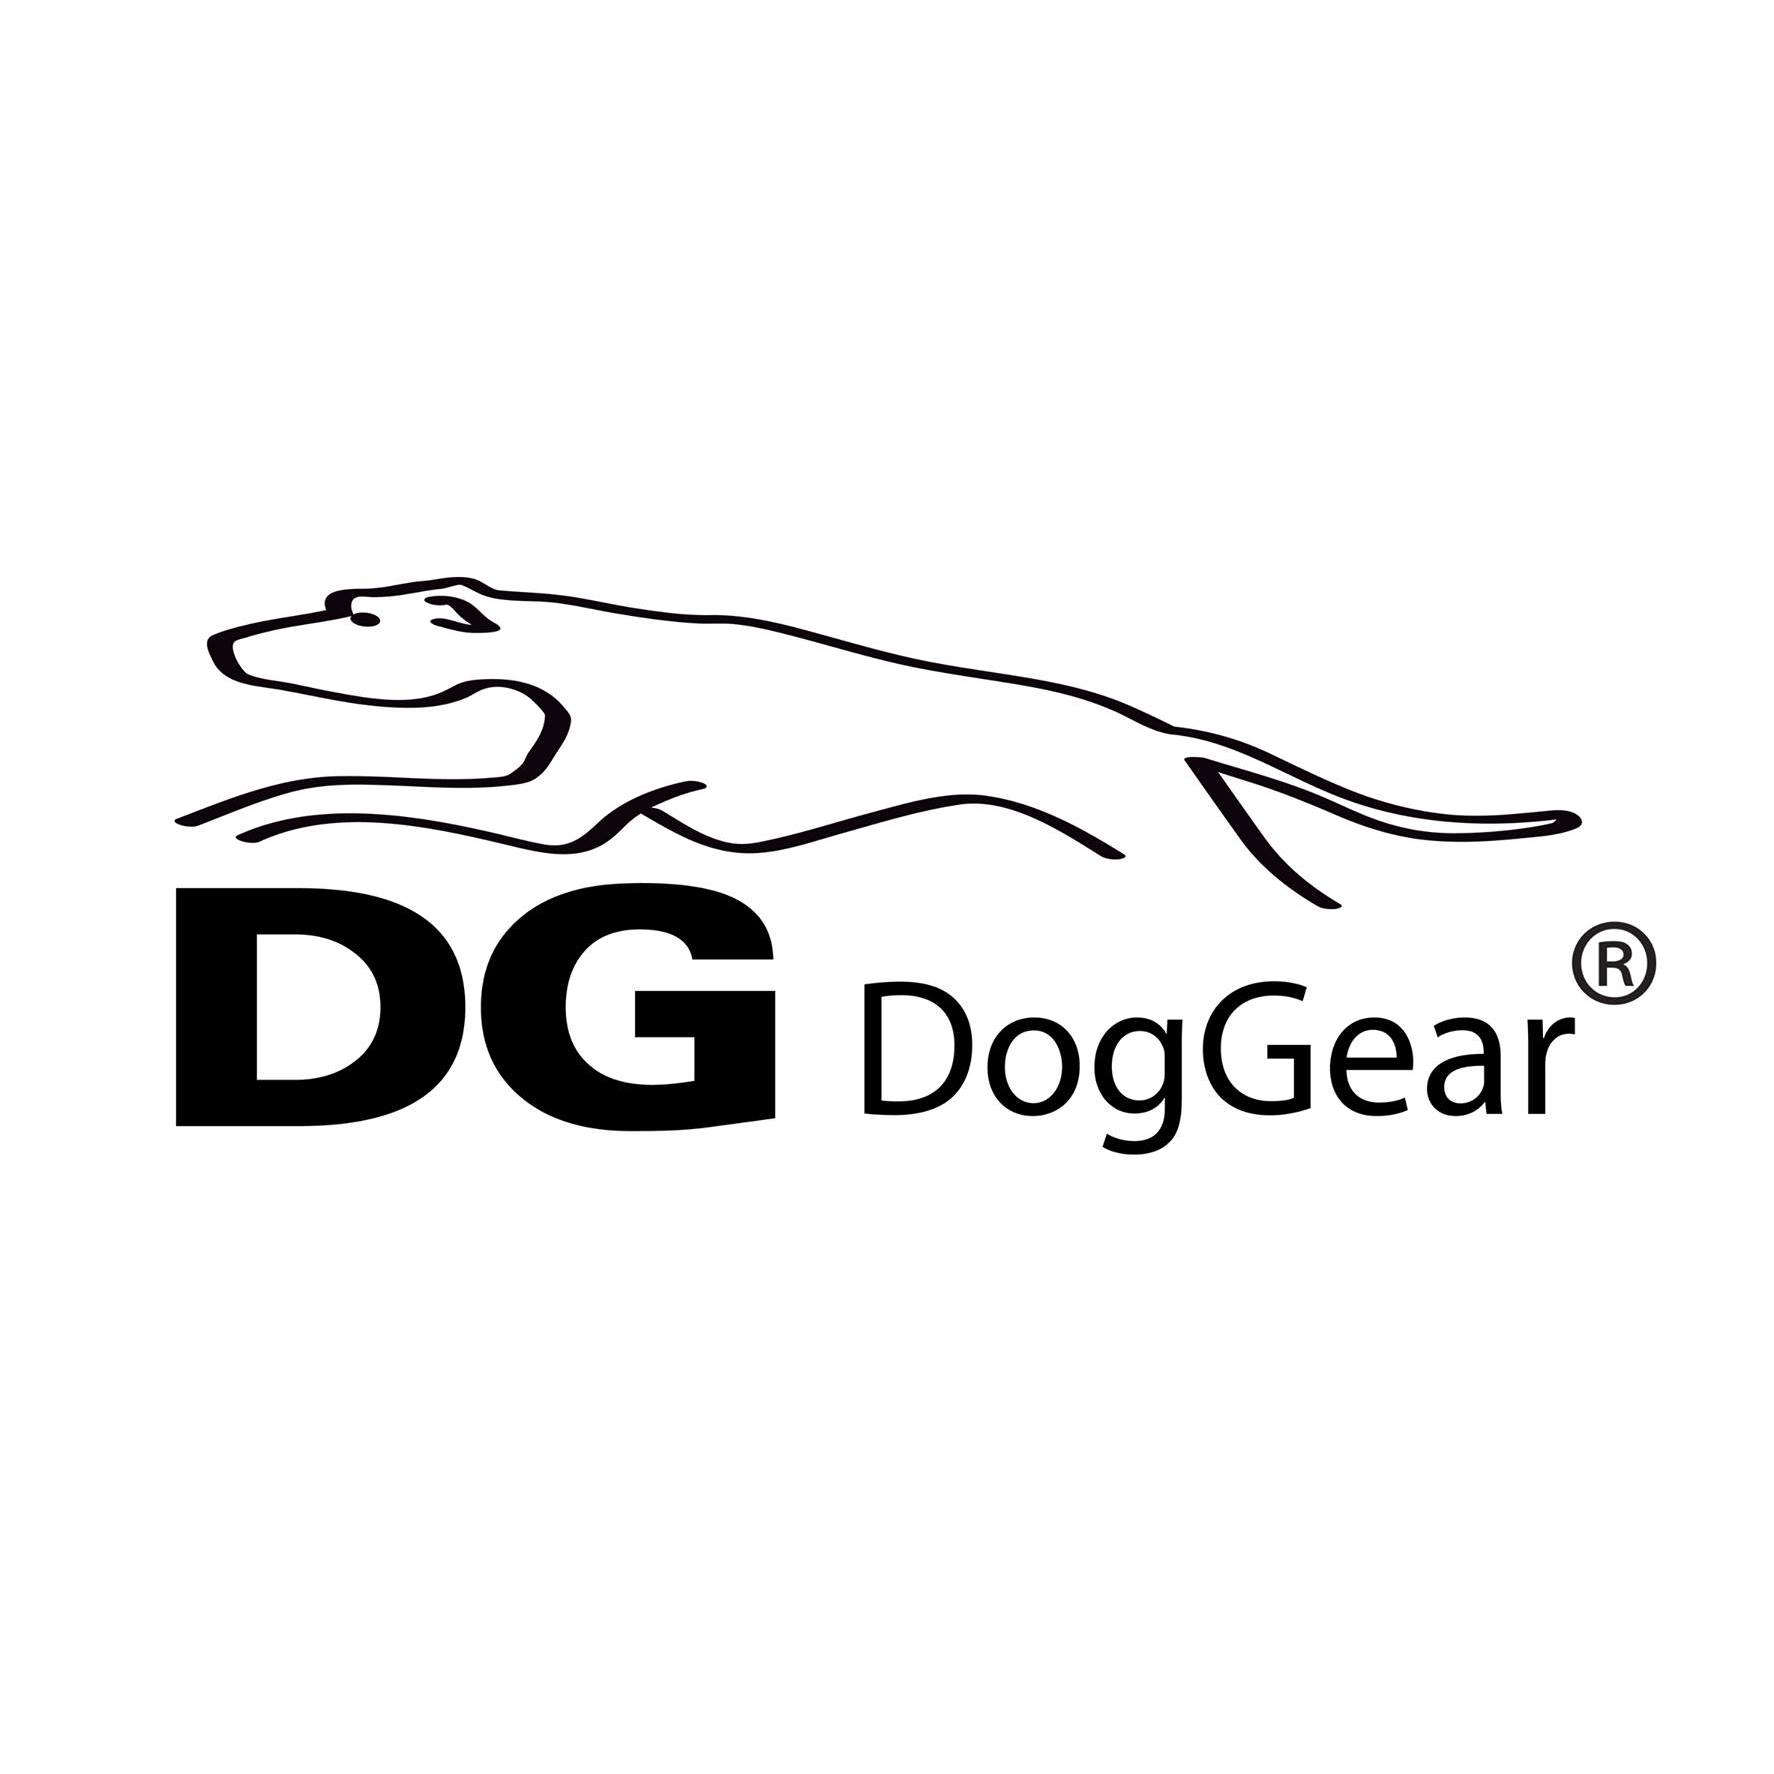 DG dog gear logo